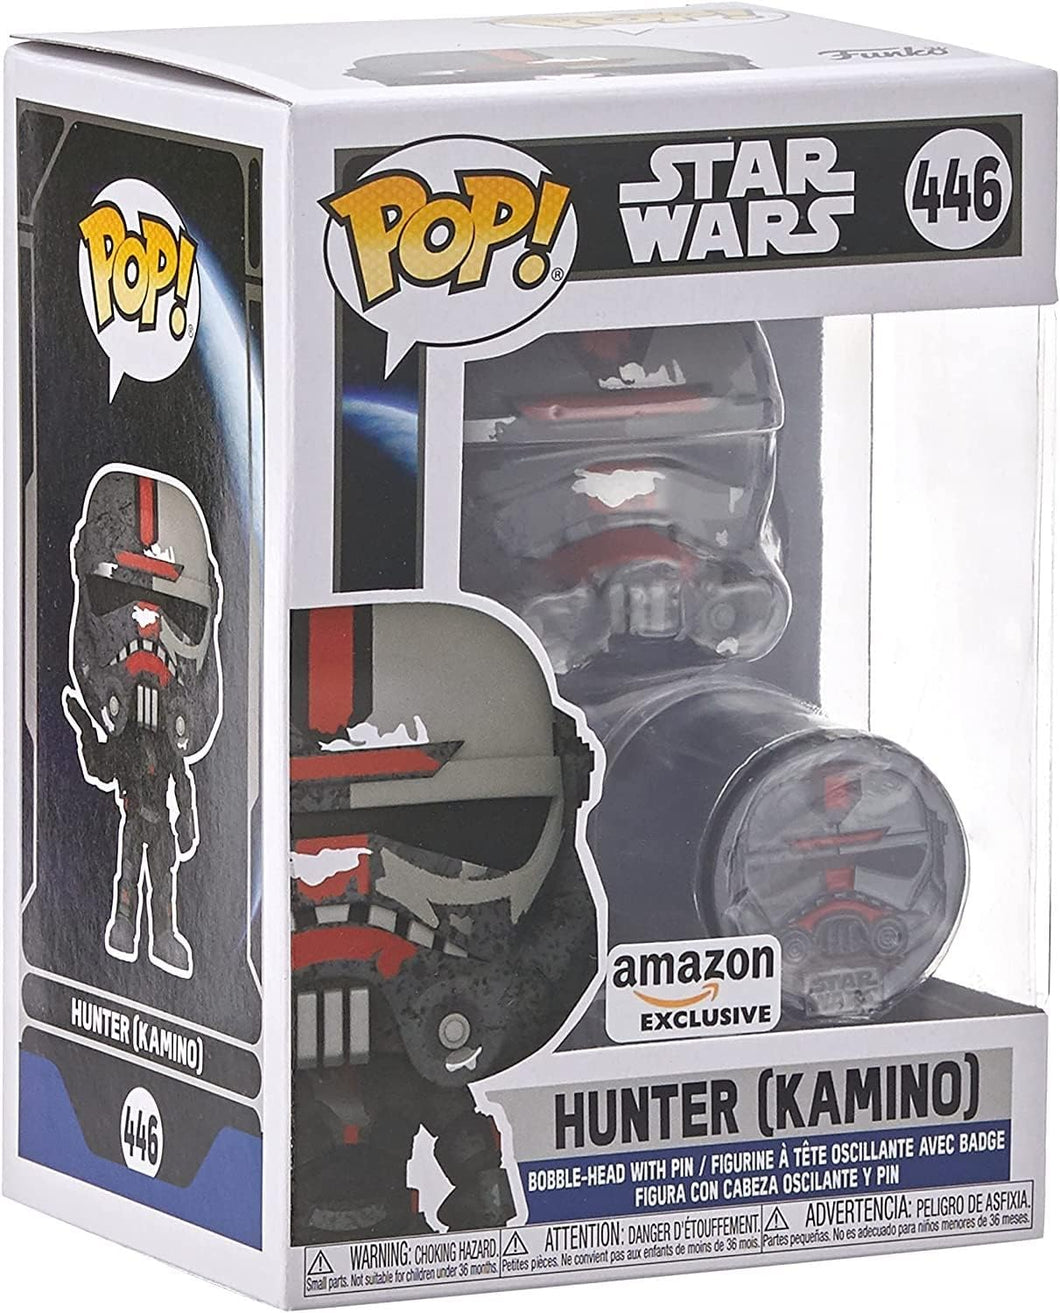 Funko POP! Star Wars Hunter (Kamino) Amazon Exclusive